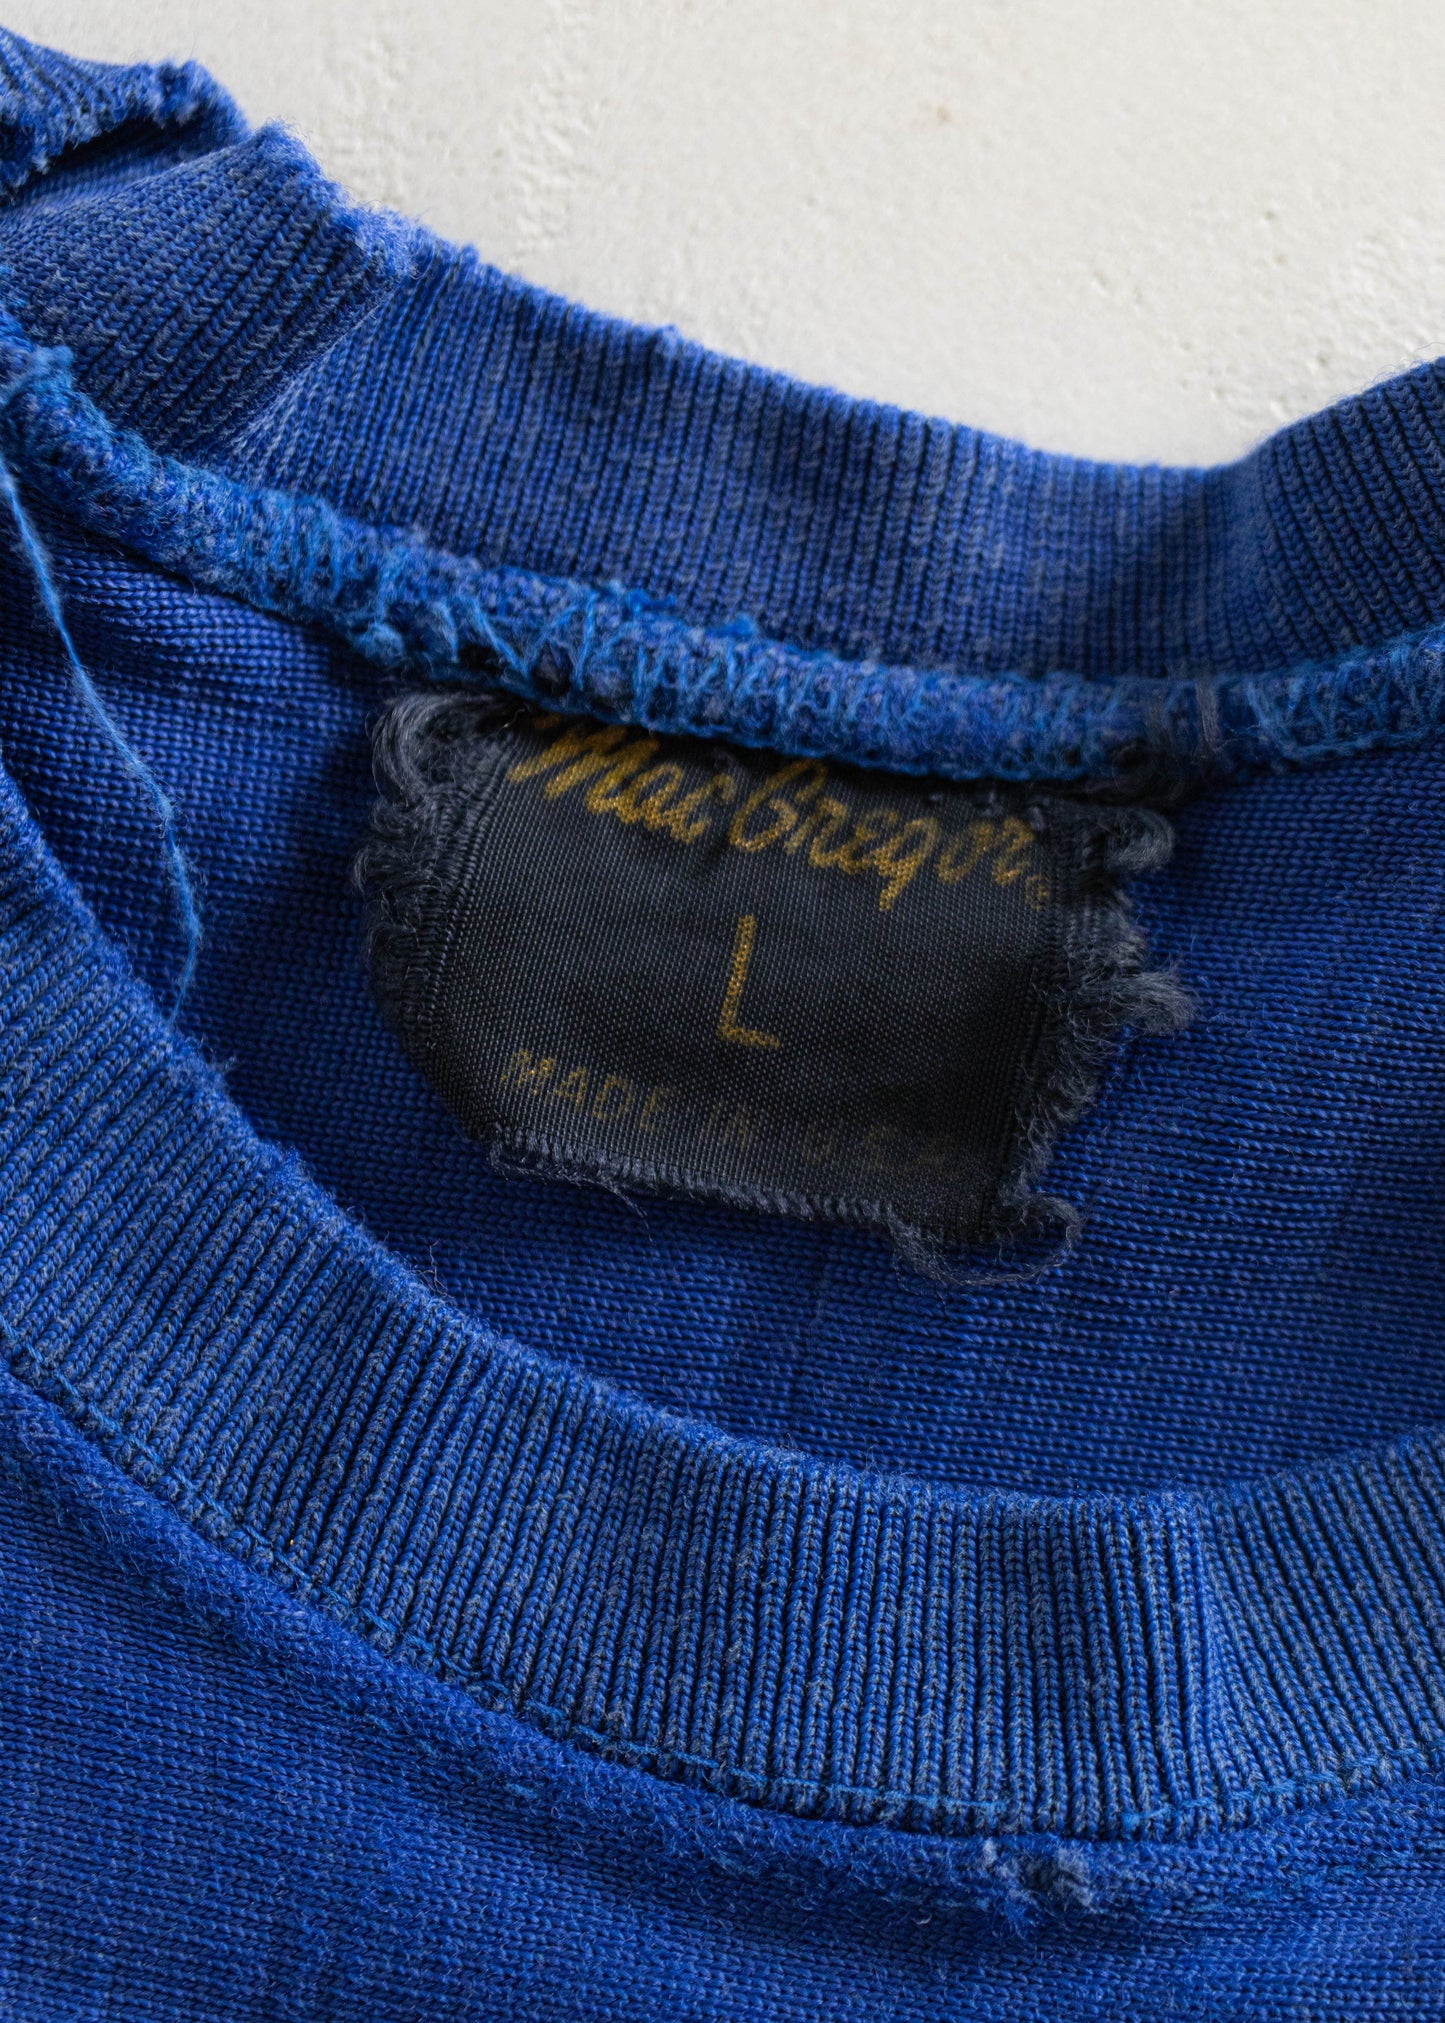 1980s MacGregor 3/4 Sleeve Sport Jersey Size M/L